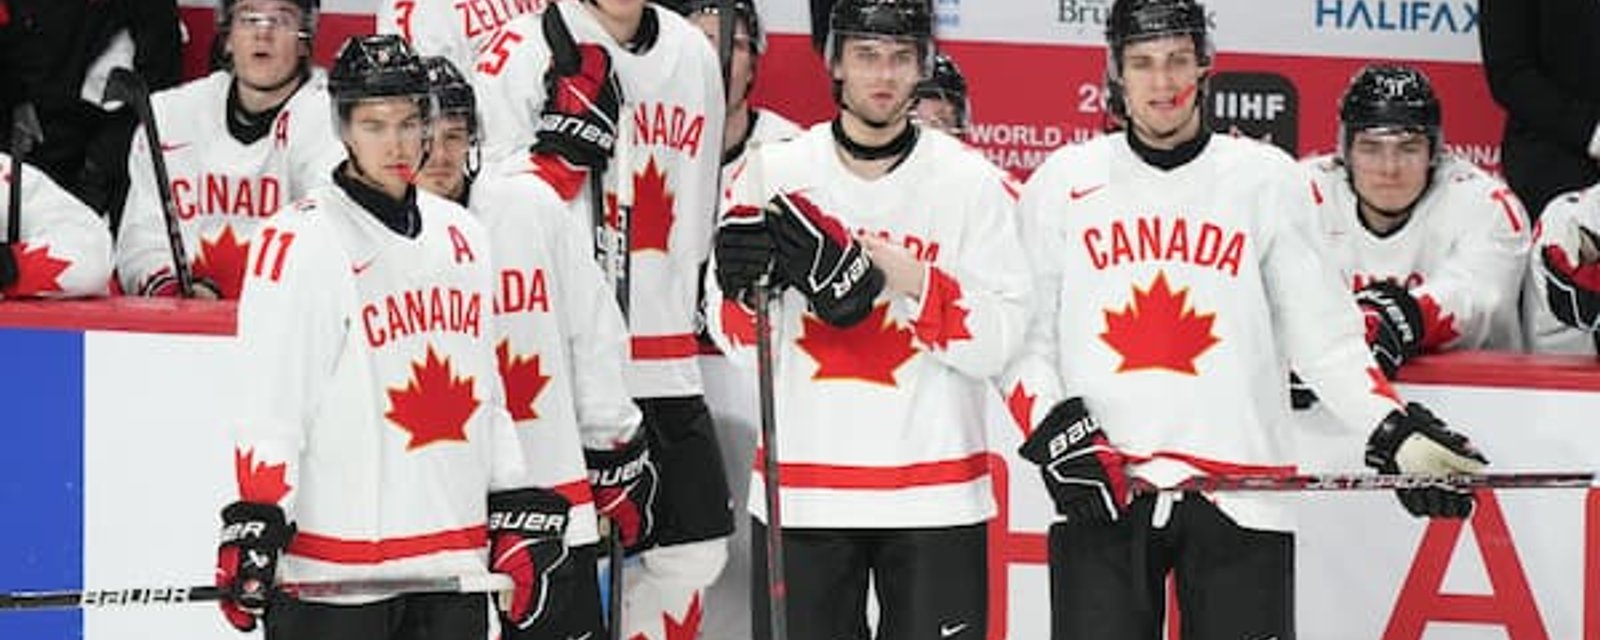 Équipe Canada junior : des statistiques encourageantes malgré un cuisant revers